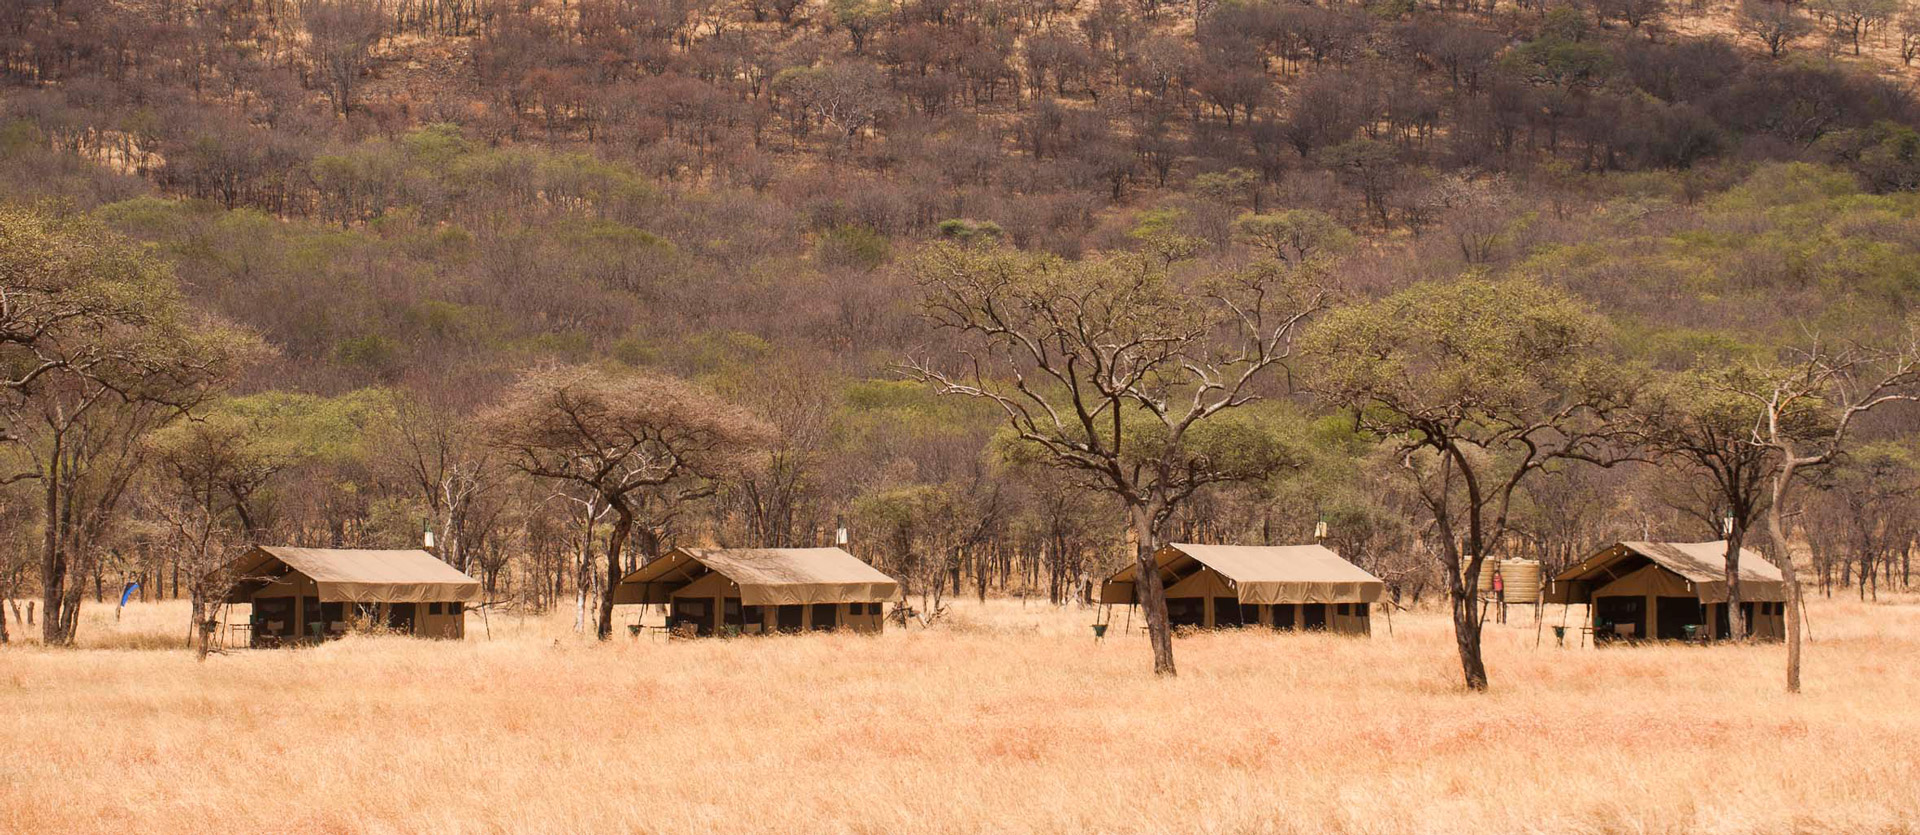 Kati Kati tented lodge Serengeti Tanzania